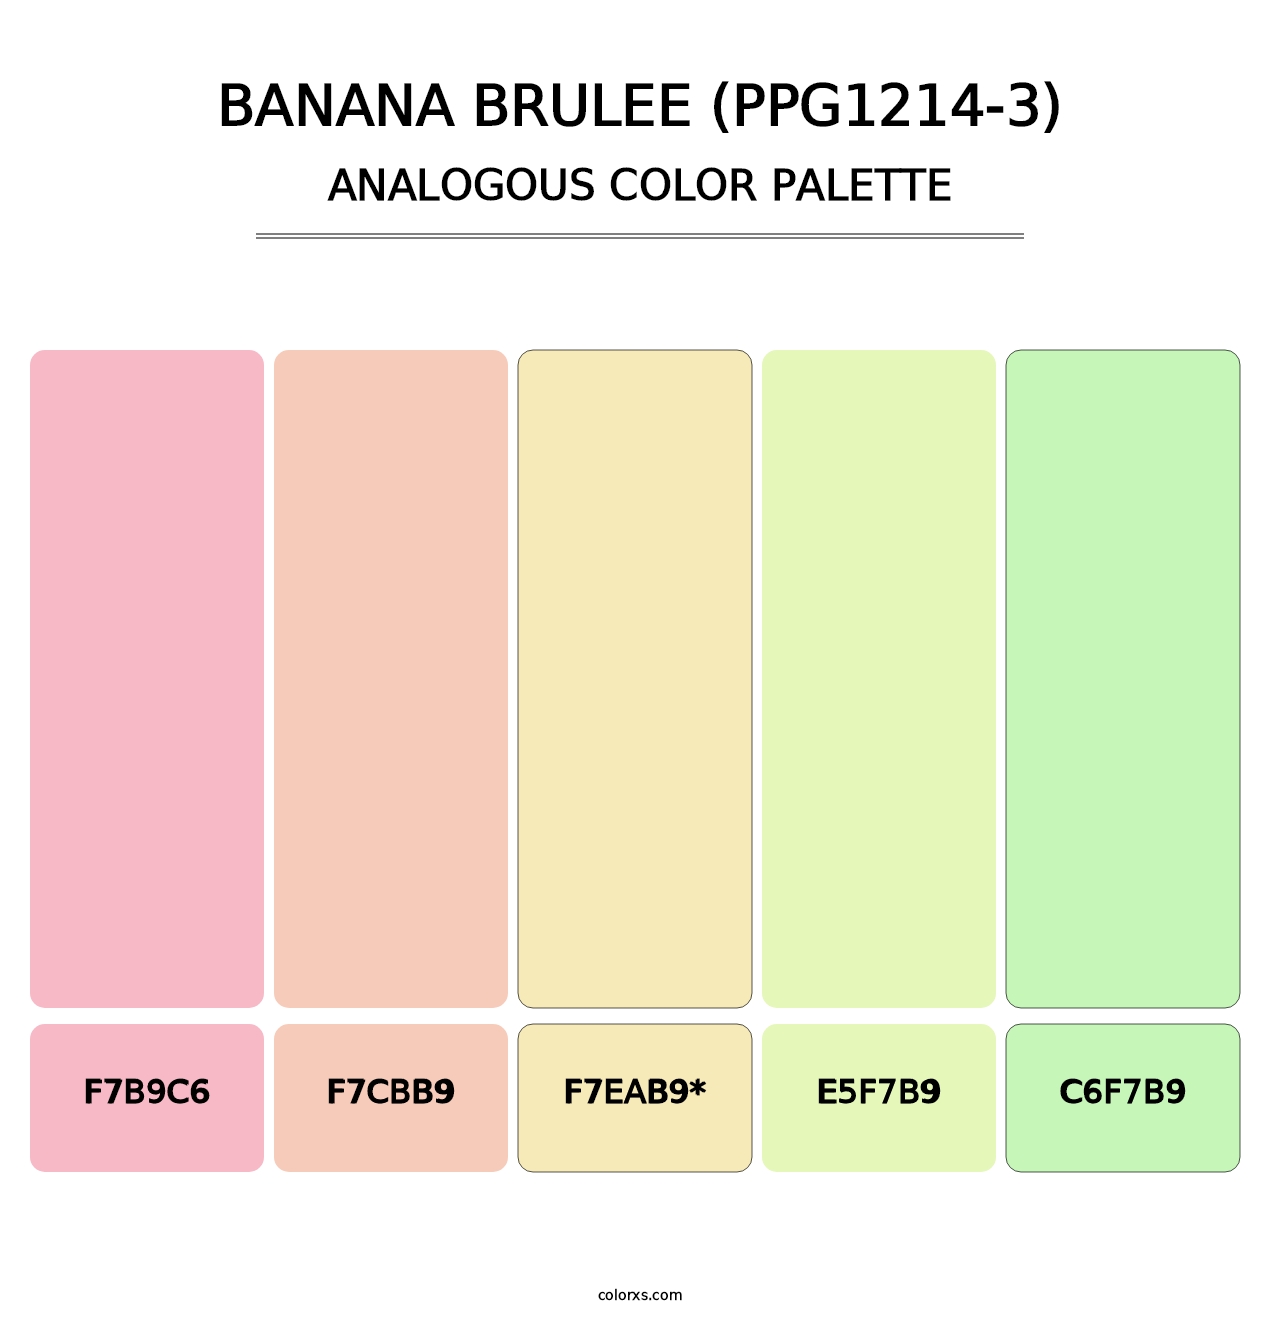 Banana Brulee (PPG1214-3) - Analogous Color Palette